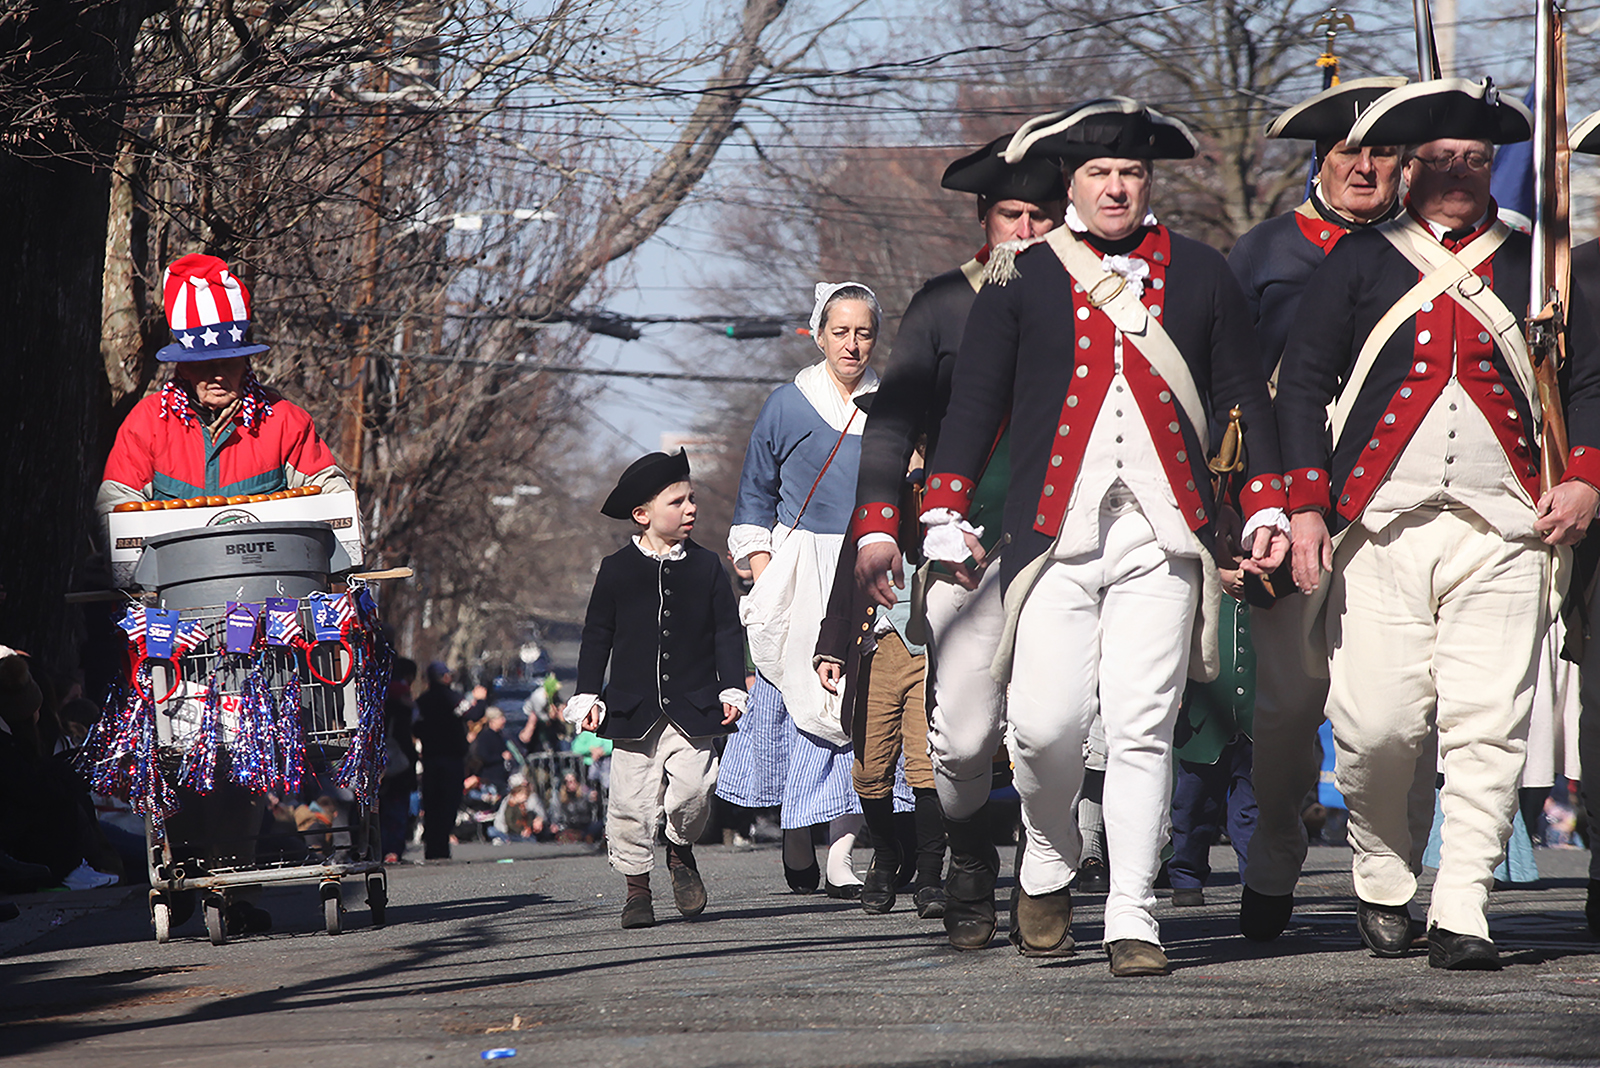 PHOTOS: The George Washington Birthday Parade in Old Town | ALXnow